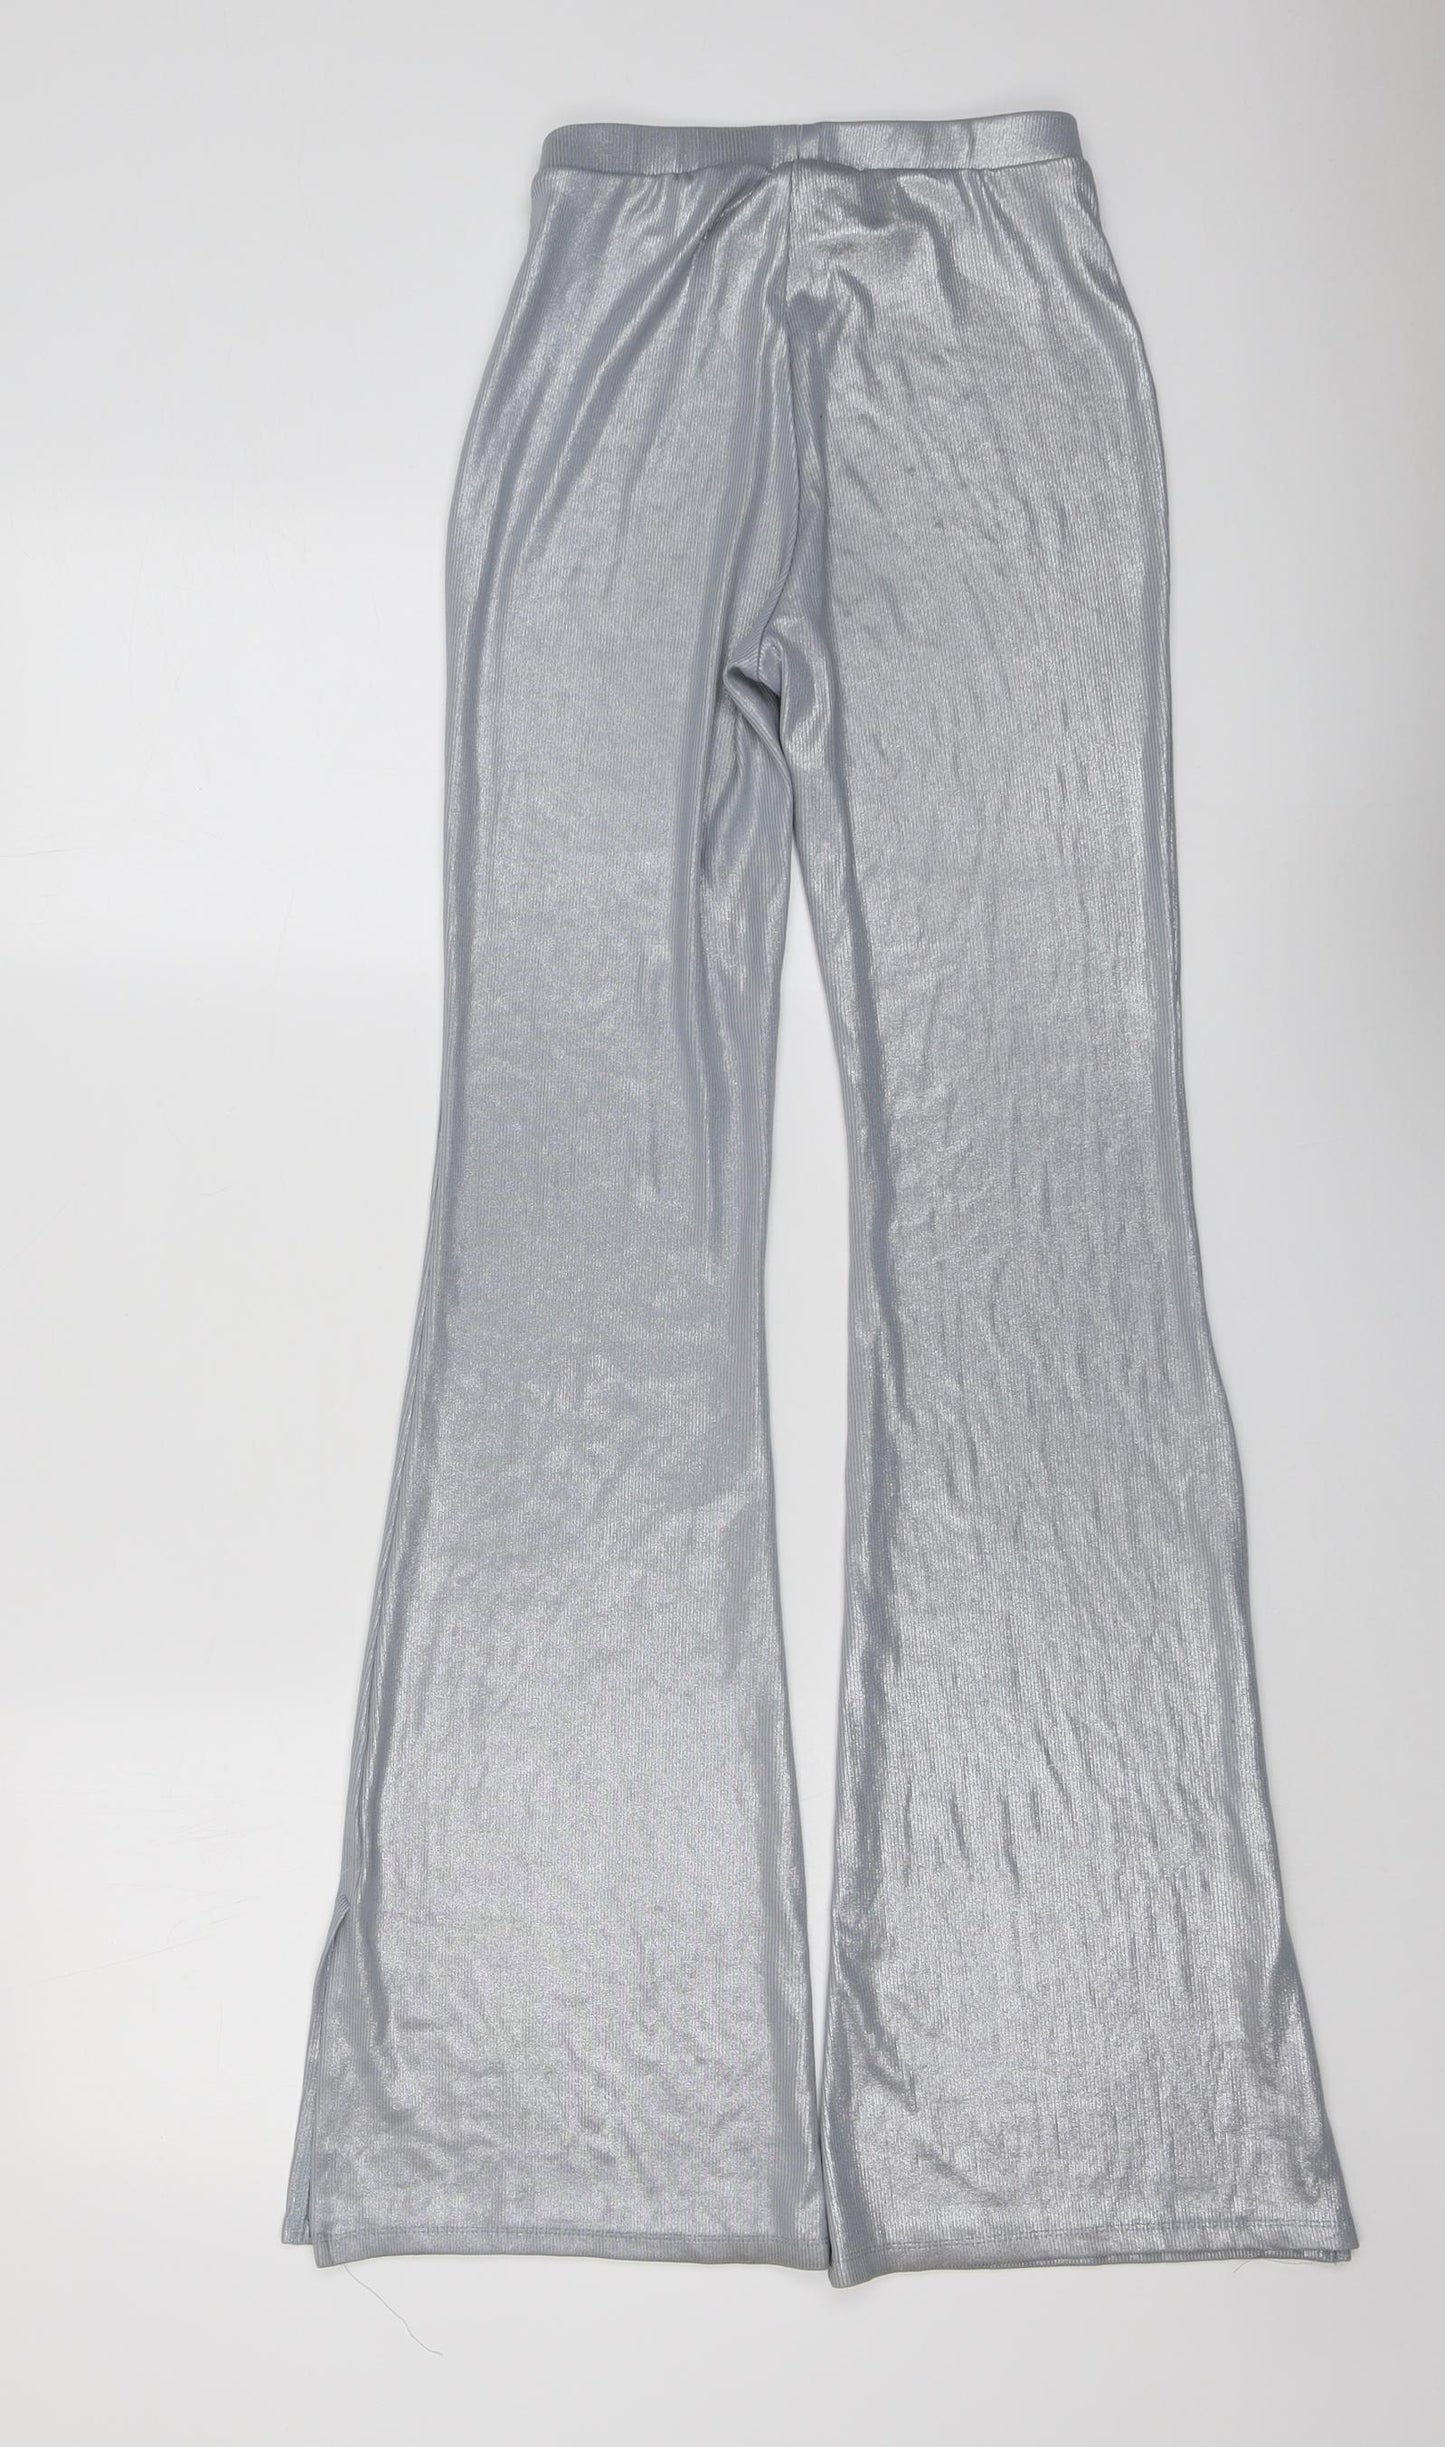 Bershka Womens Silver Polyester Dress Pants Trousers Size S L31 in Regular